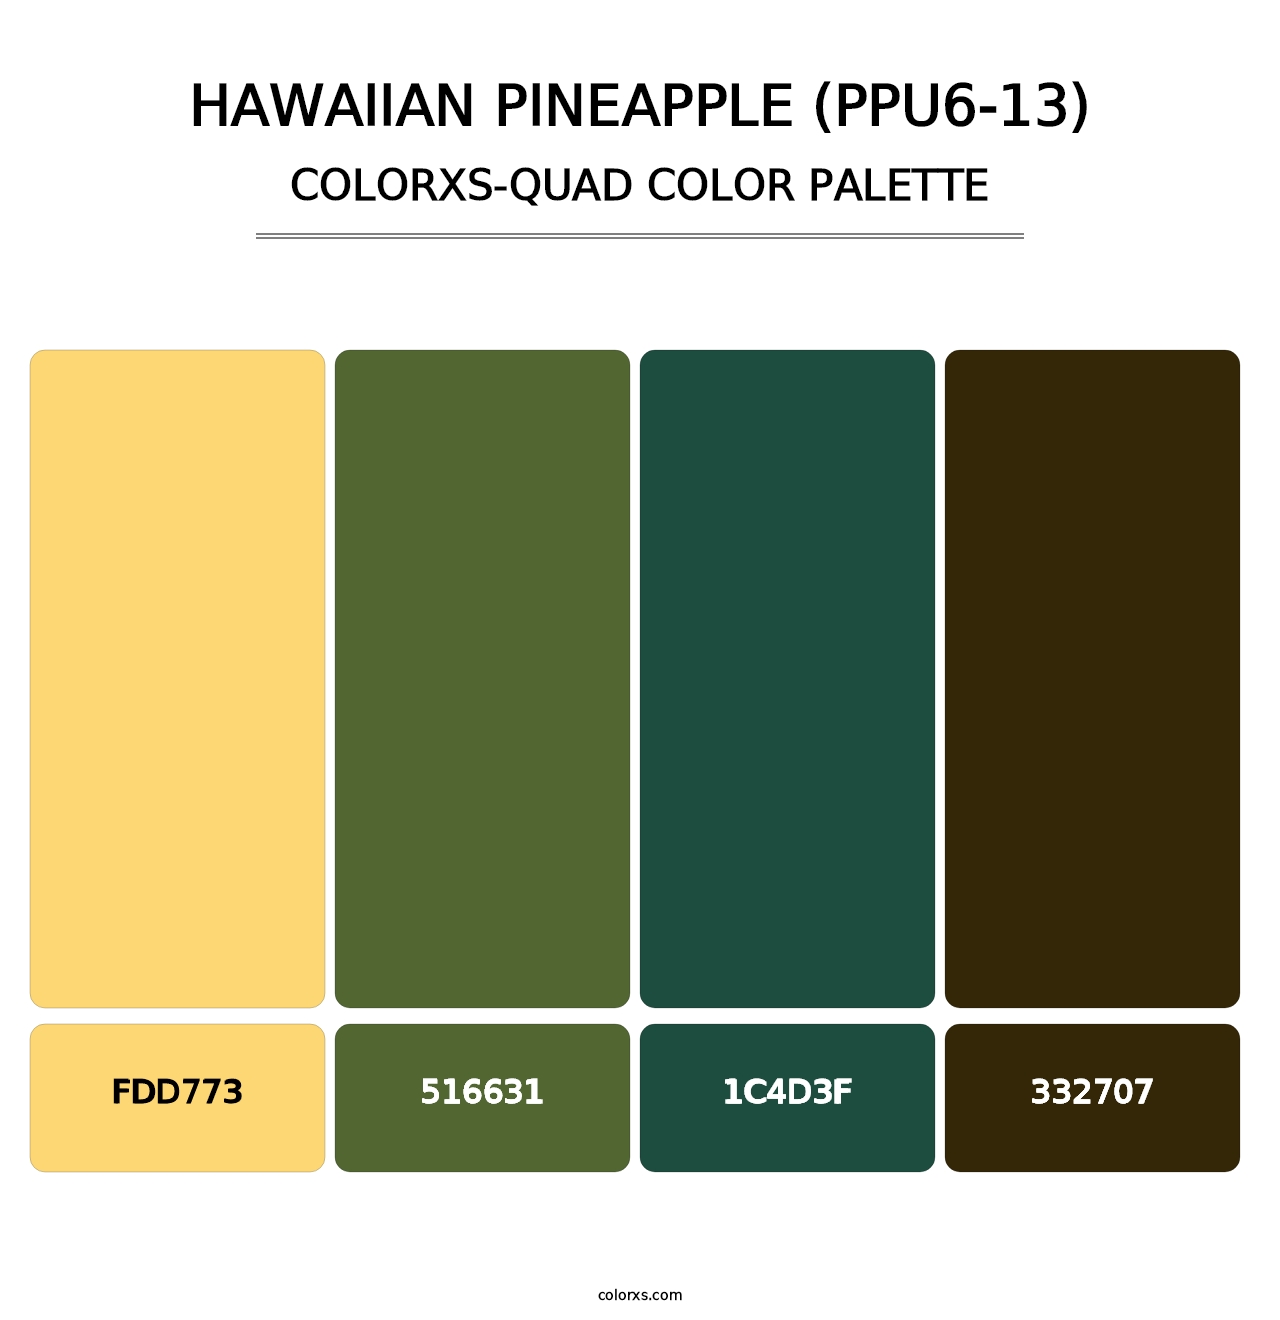 Hawaiian Pineapple (PPU6-13) - Colorxs Quad Palette